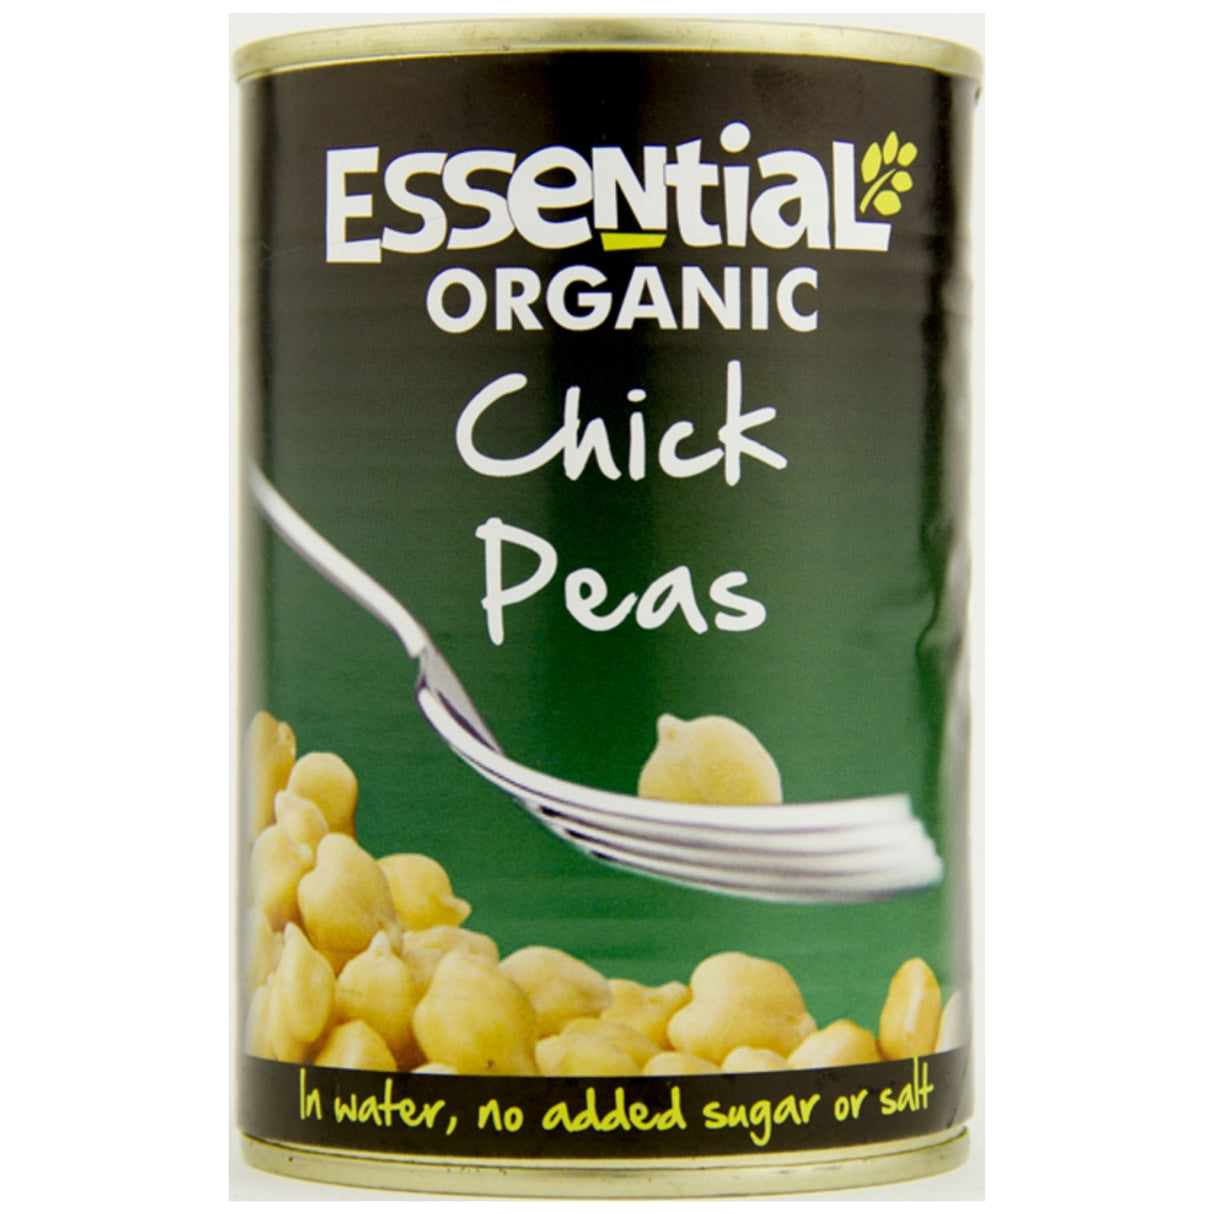 Essential Organic Chick Peas 400g